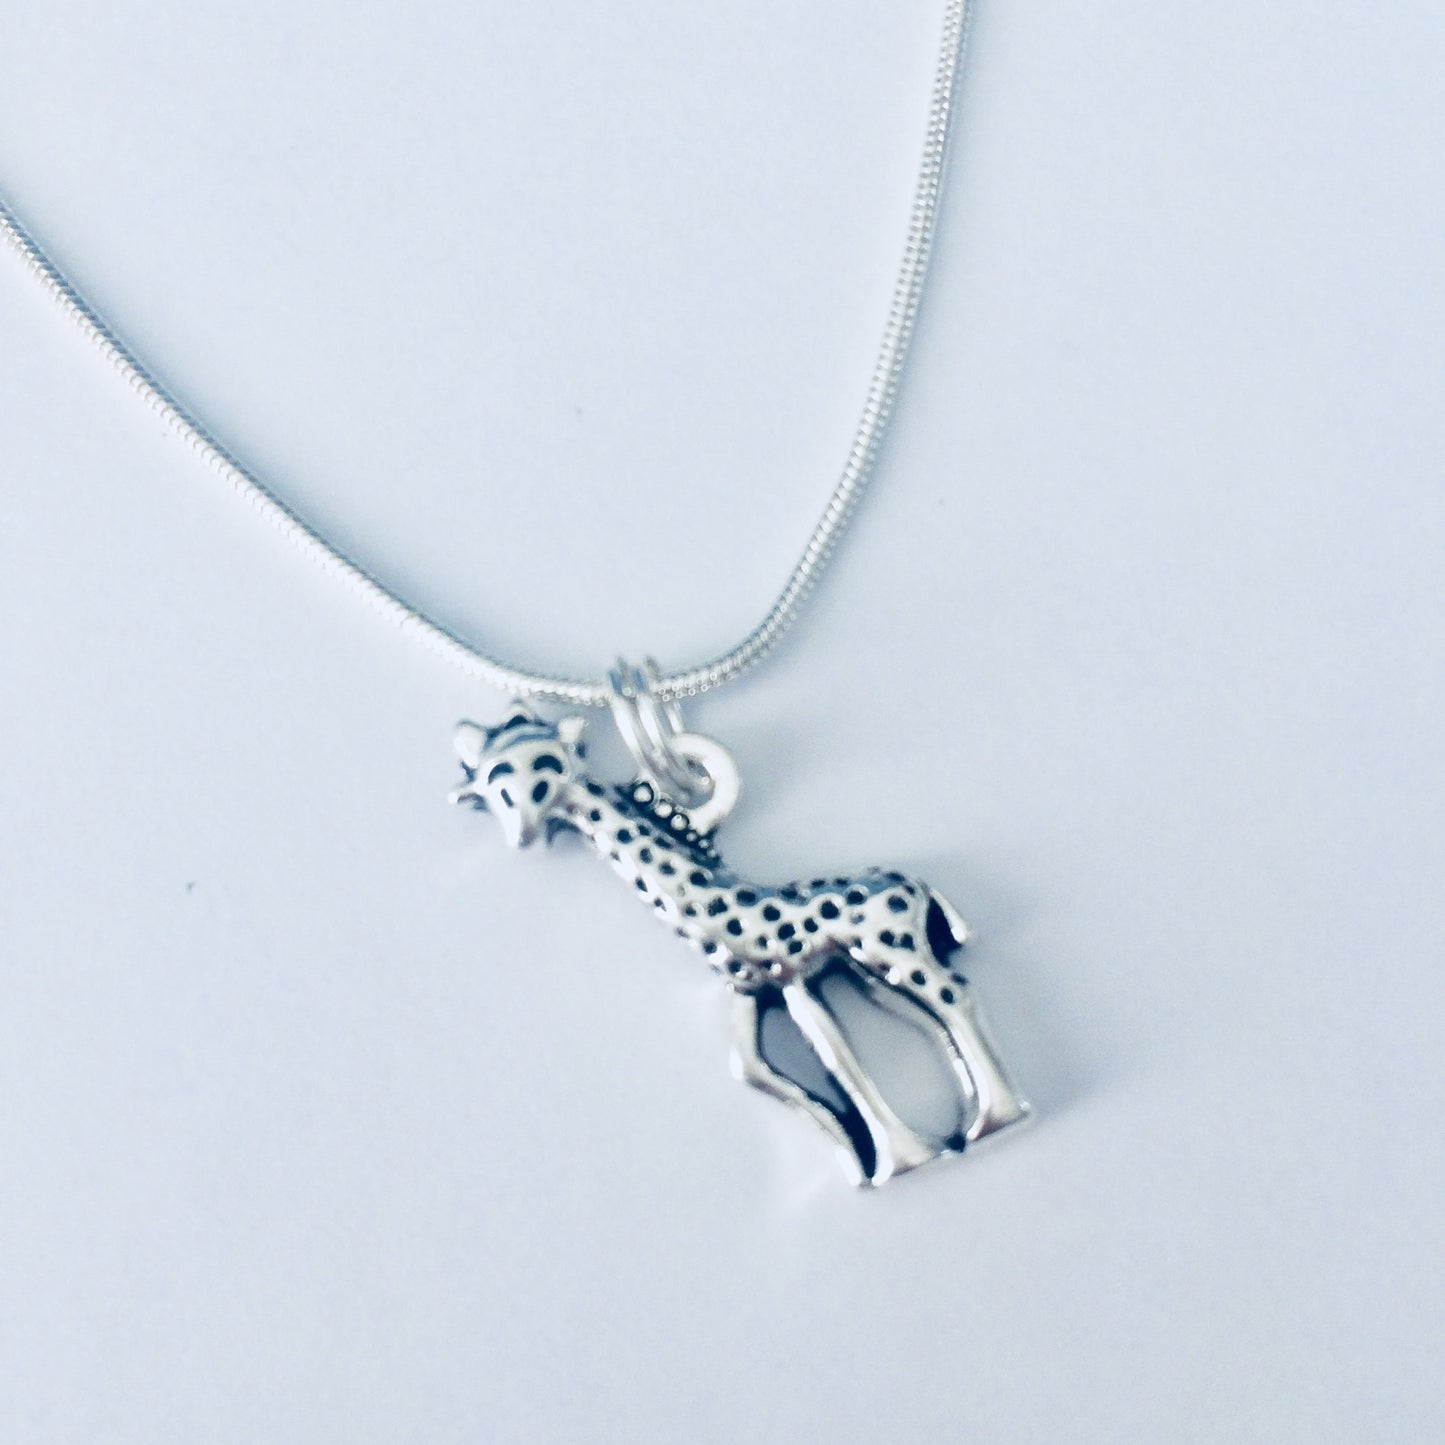 Giraffe Necklace, Giraffe Jewelry, Safari Charm, Animal Pendant, Giraffe Jewellery, Animal Jewelry, Zoological Gift, Zoo Animal Gift, Safari